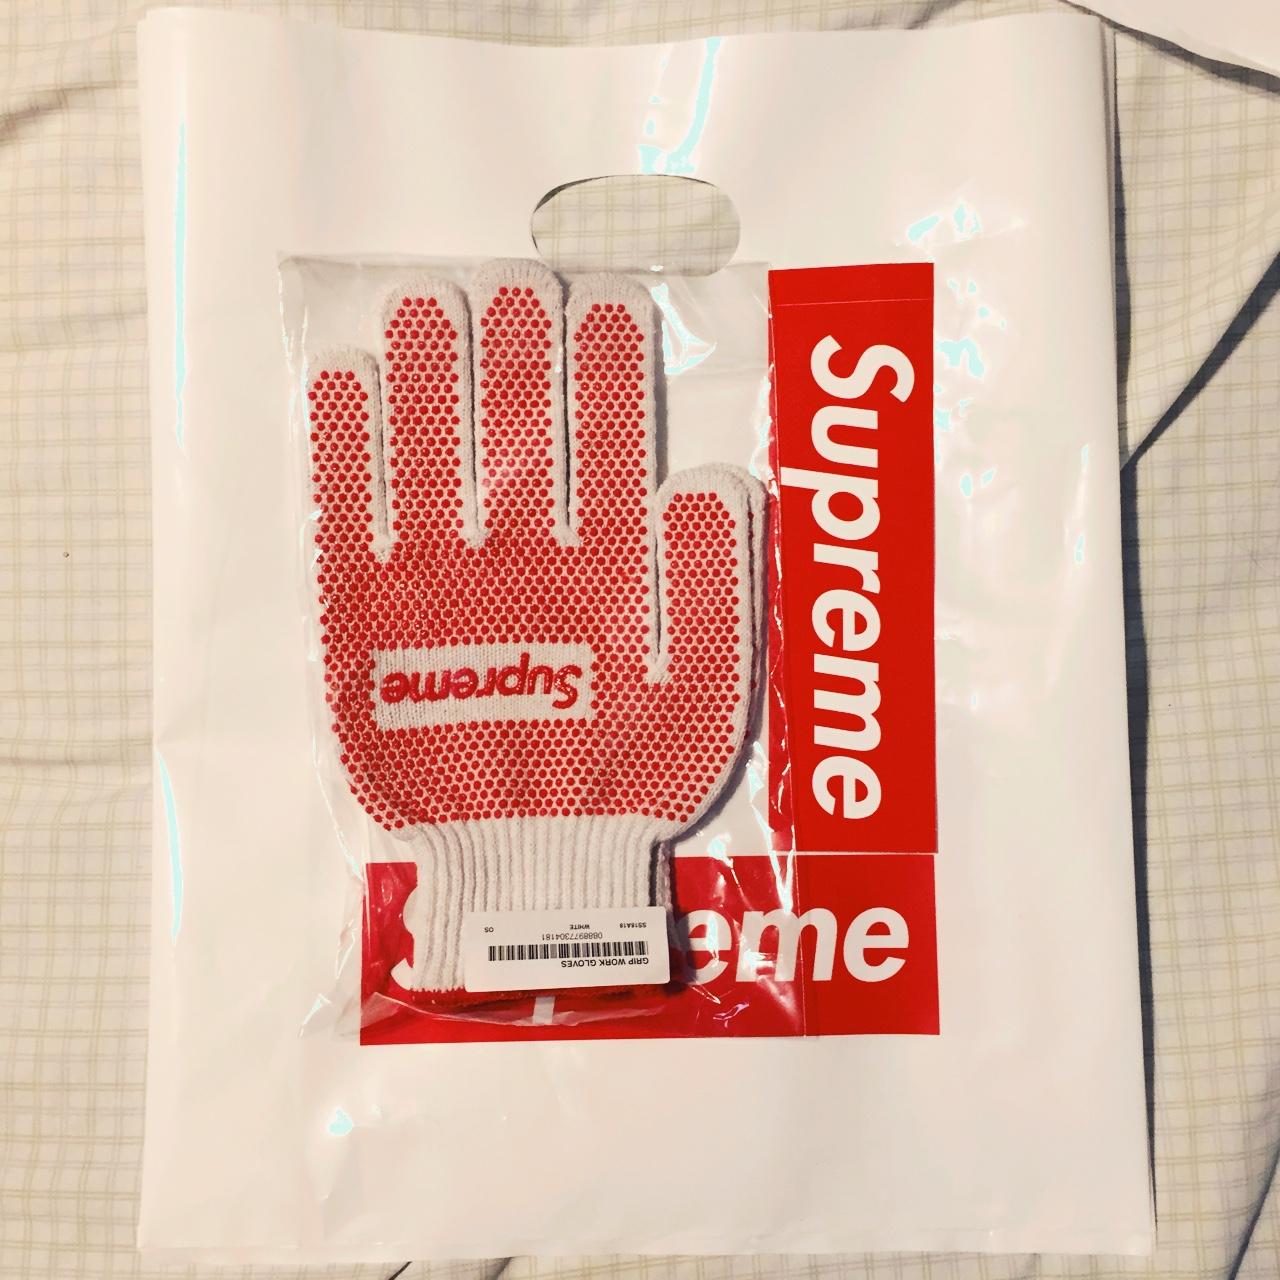 Supreme Grip Work Gloves White Genuine Rare